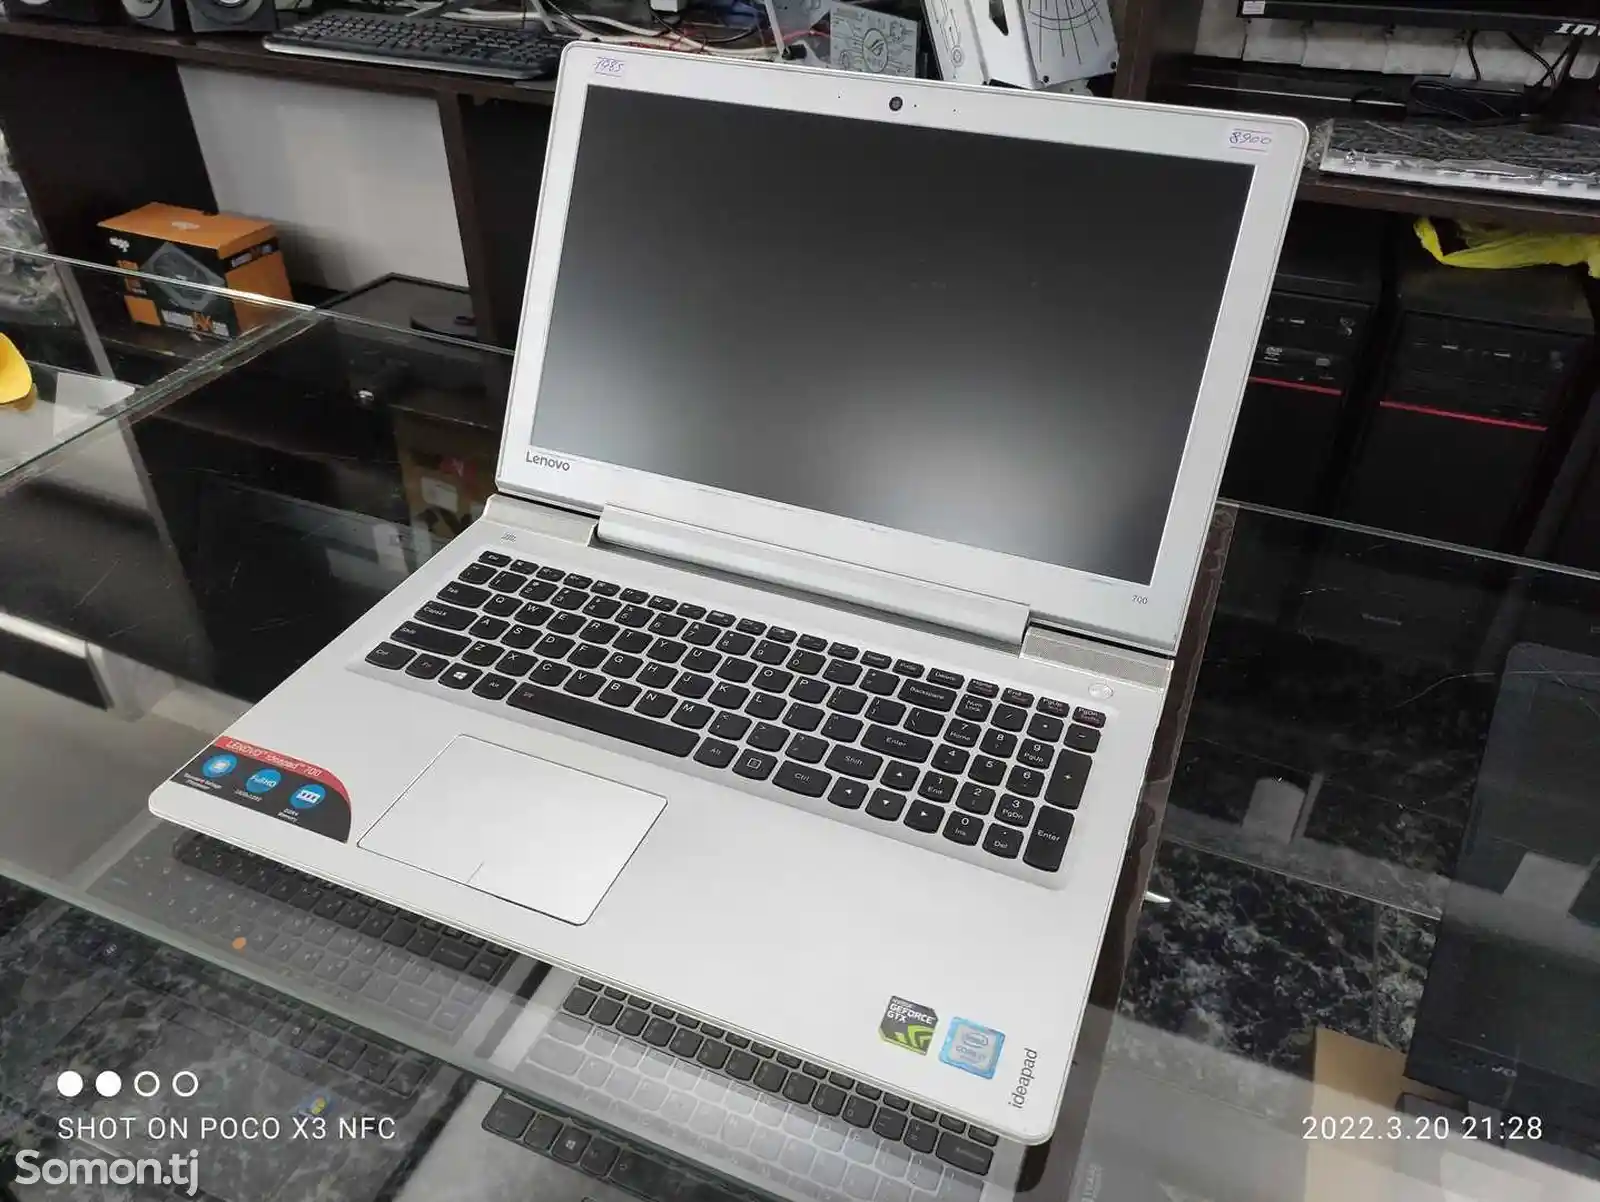 Игровой Ноутбук Lenovo Ideapad 700 Core i7-6700HQ GTX 950M 2GB-3